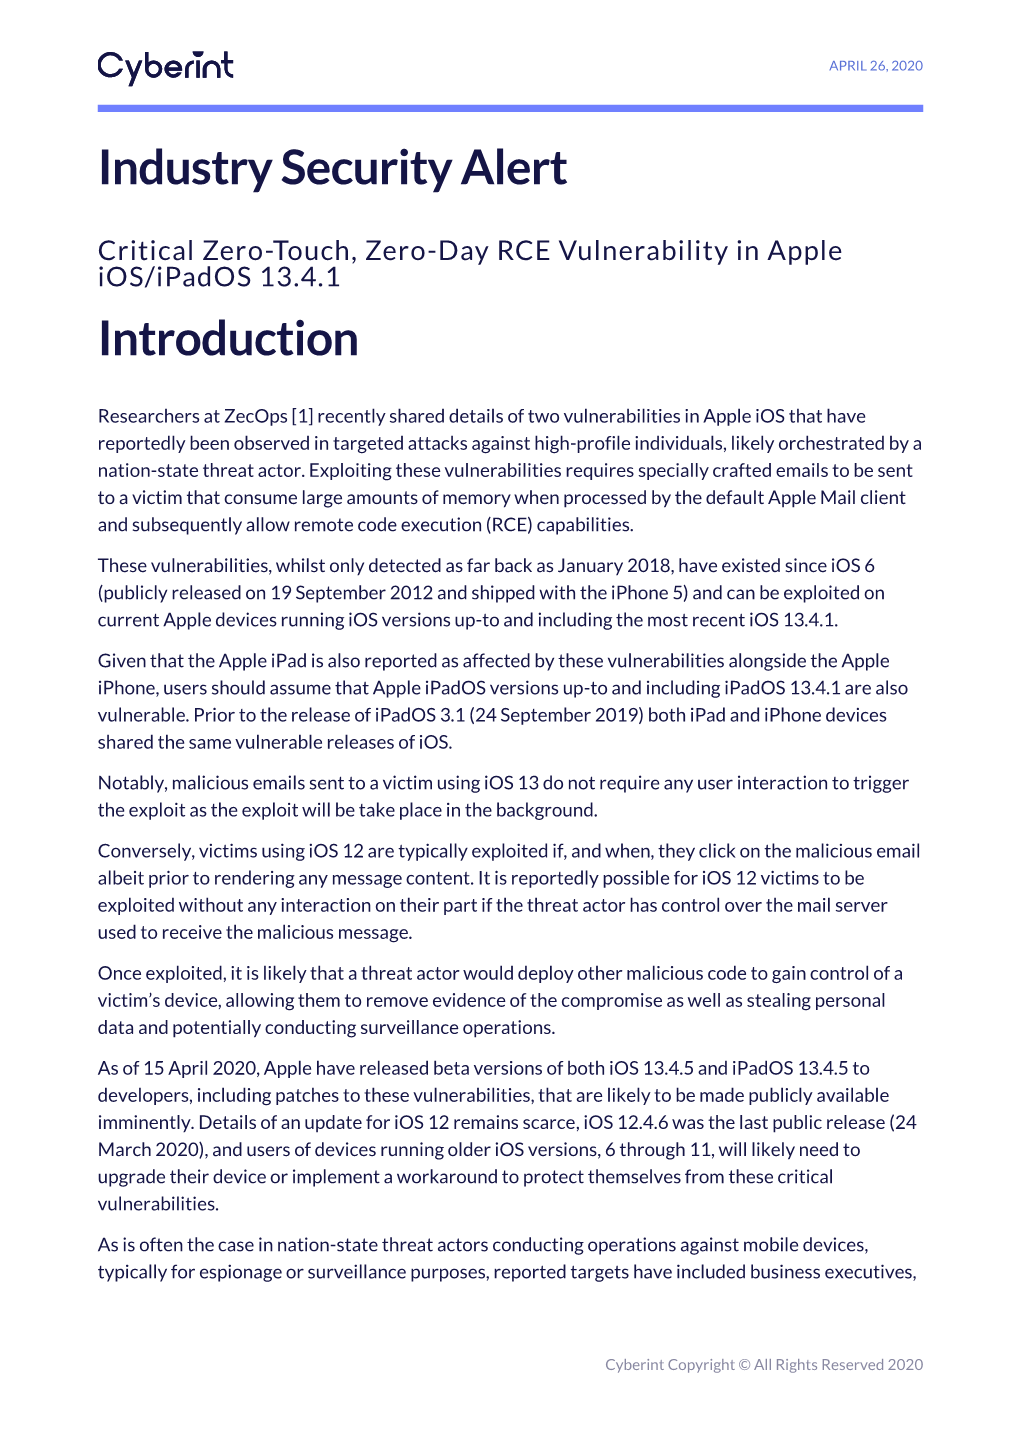 Critical Zero-Touch, Zero-Day RCE Vulnerability in Apple Ios/Ipados 13.4.1